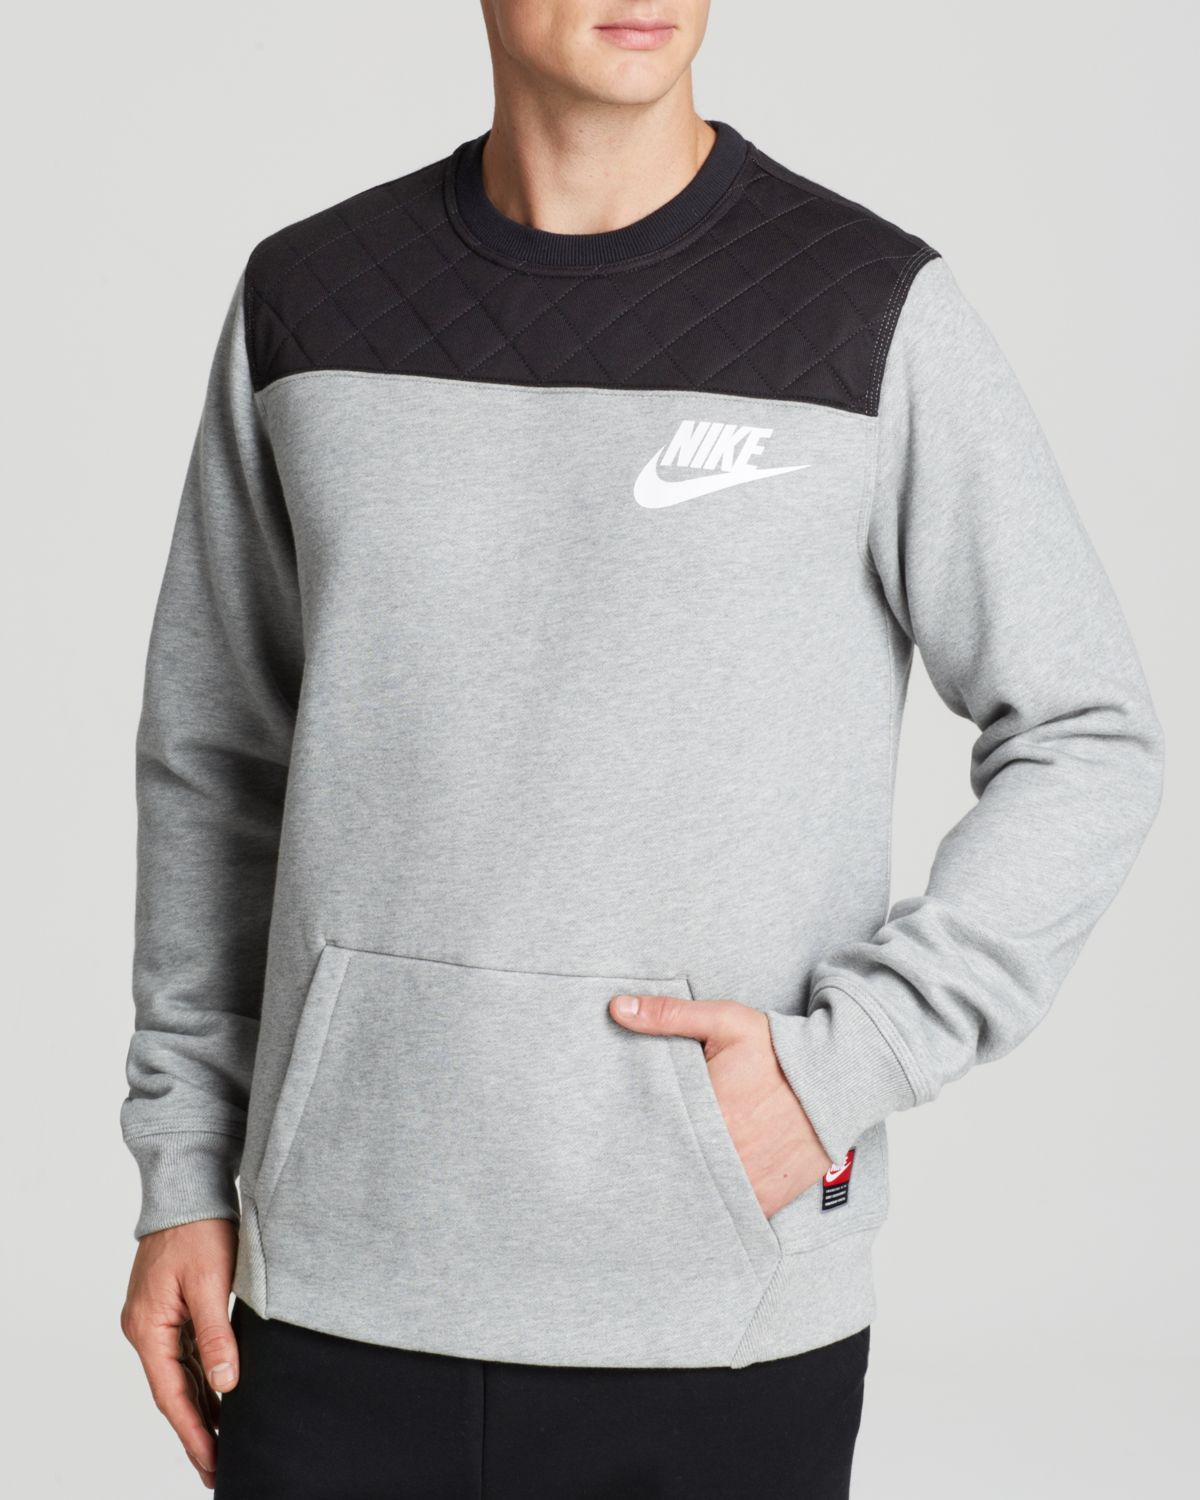 Lyst - Nike Crewneck Pullover Sweatshirt in Gray for Men